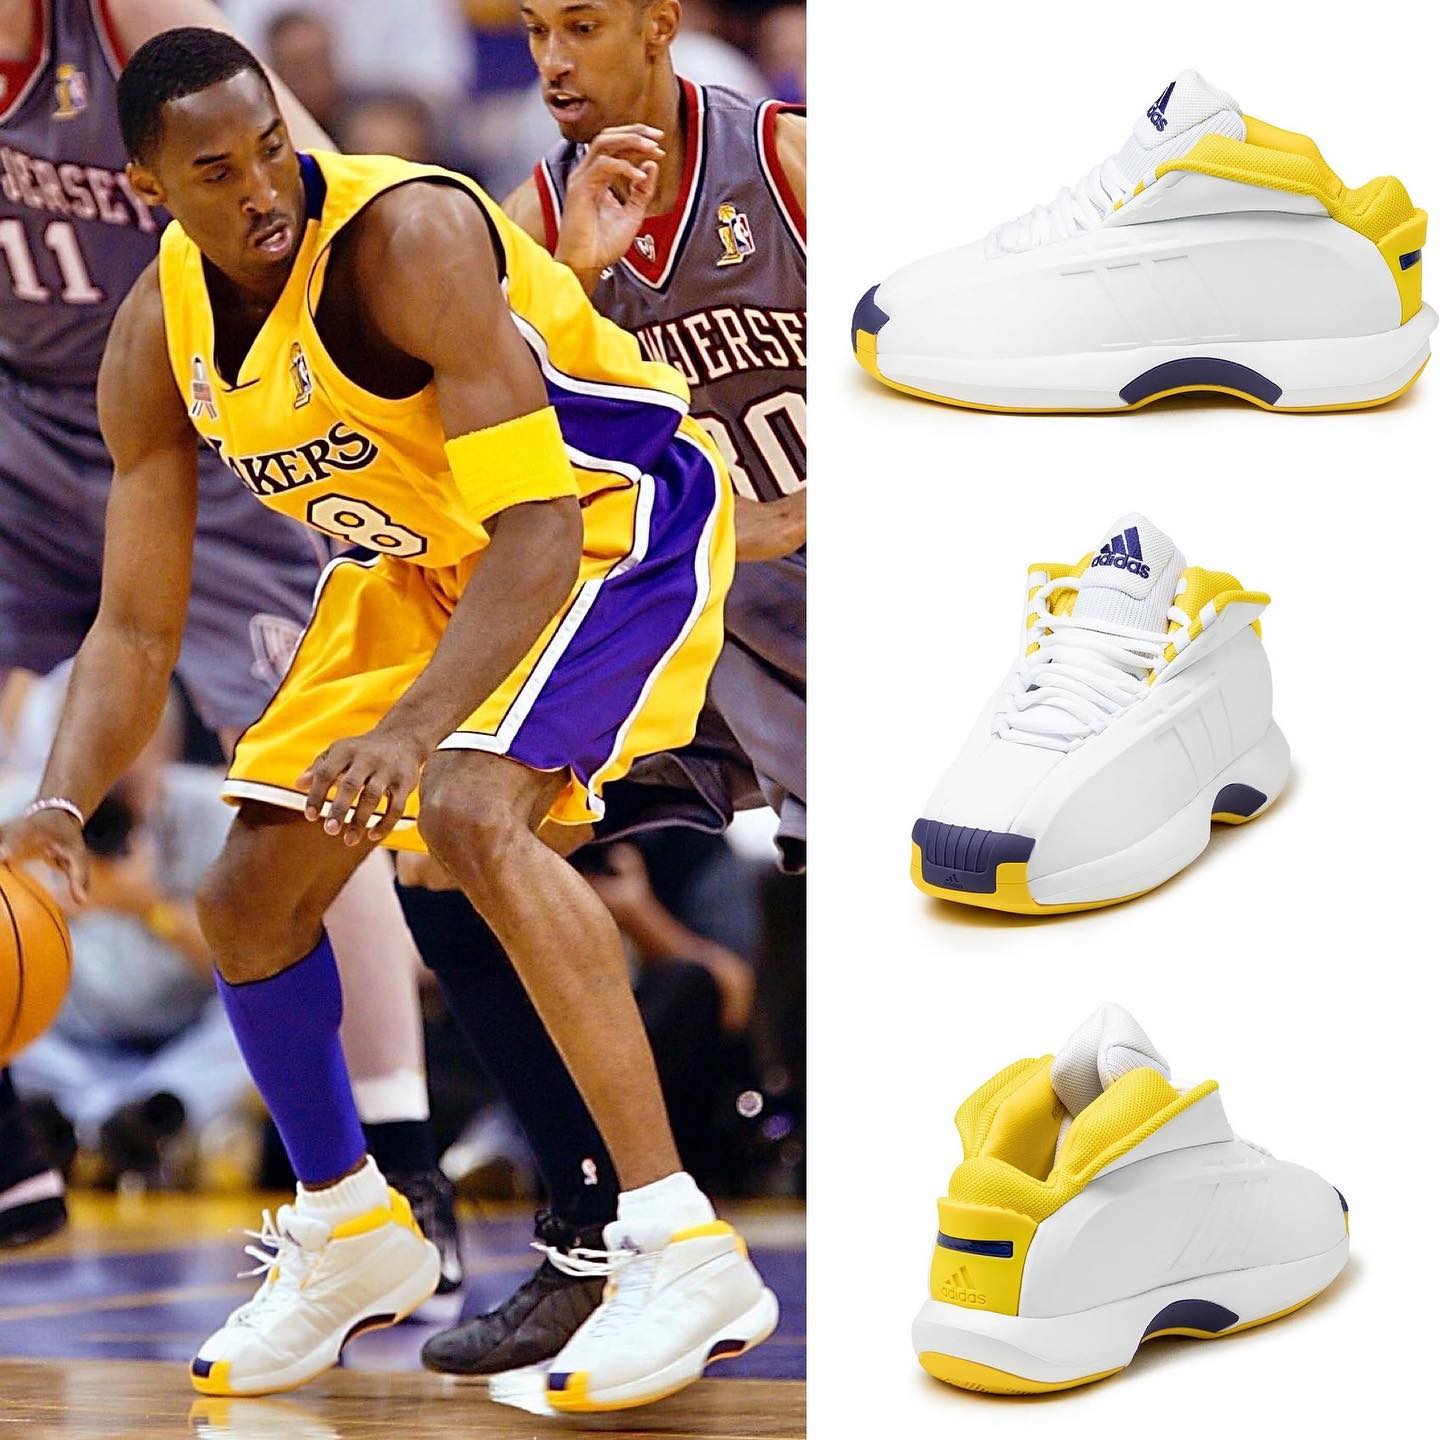 adidas,Crazy 1,Lakers Home,GY8  下一双科比球鞋复刻！时隔 16 年回归的「湖人配色」！